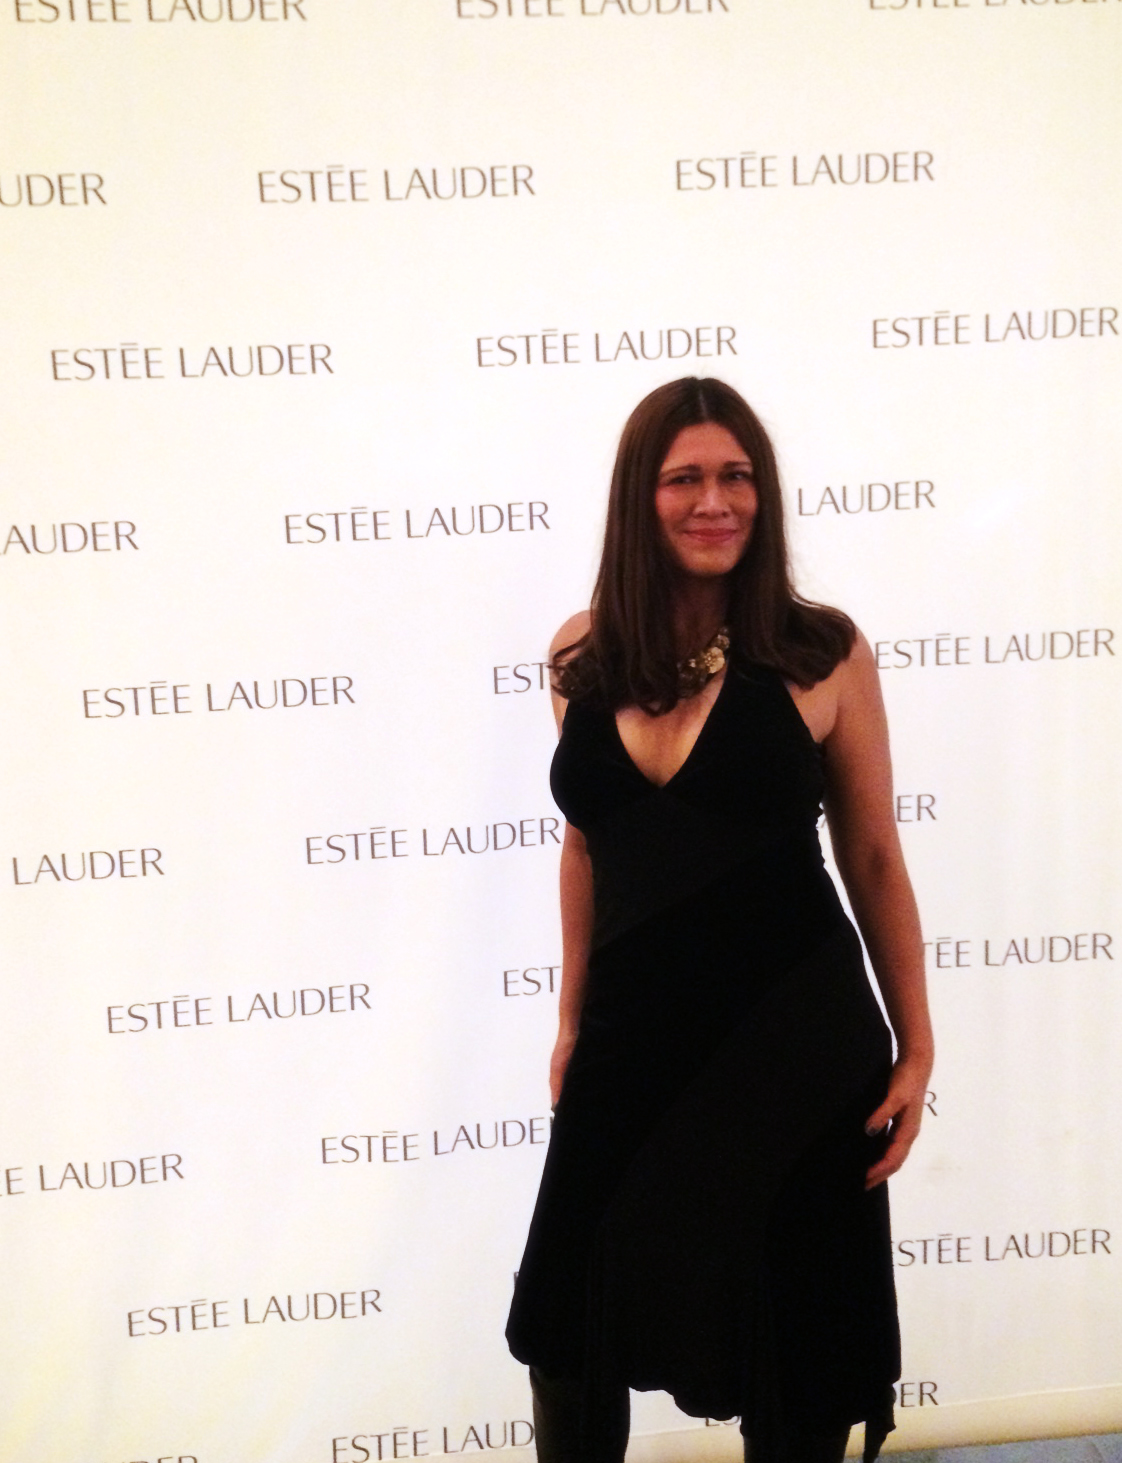 Estee Lauder Oscars After Party 2015. Carolin Von Petzholdt